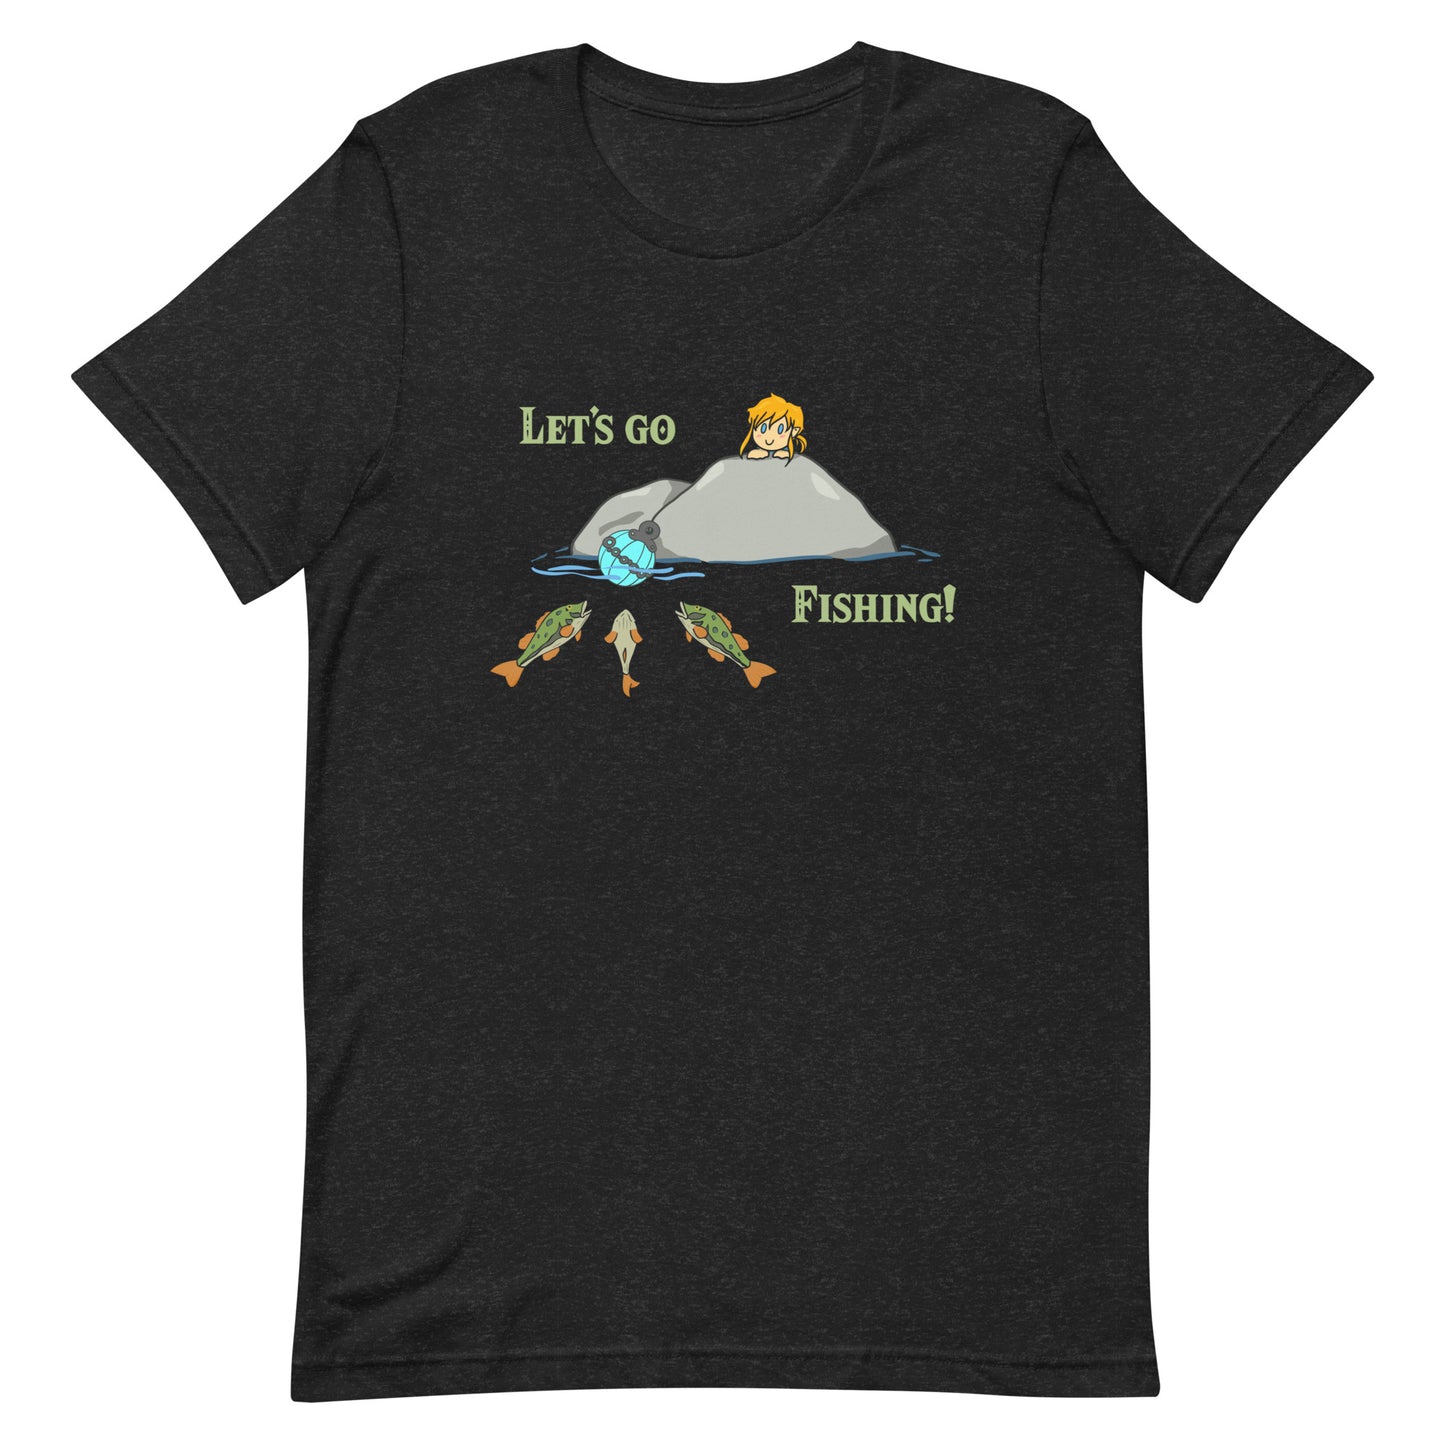 Let's Go Fishing! T-shirt